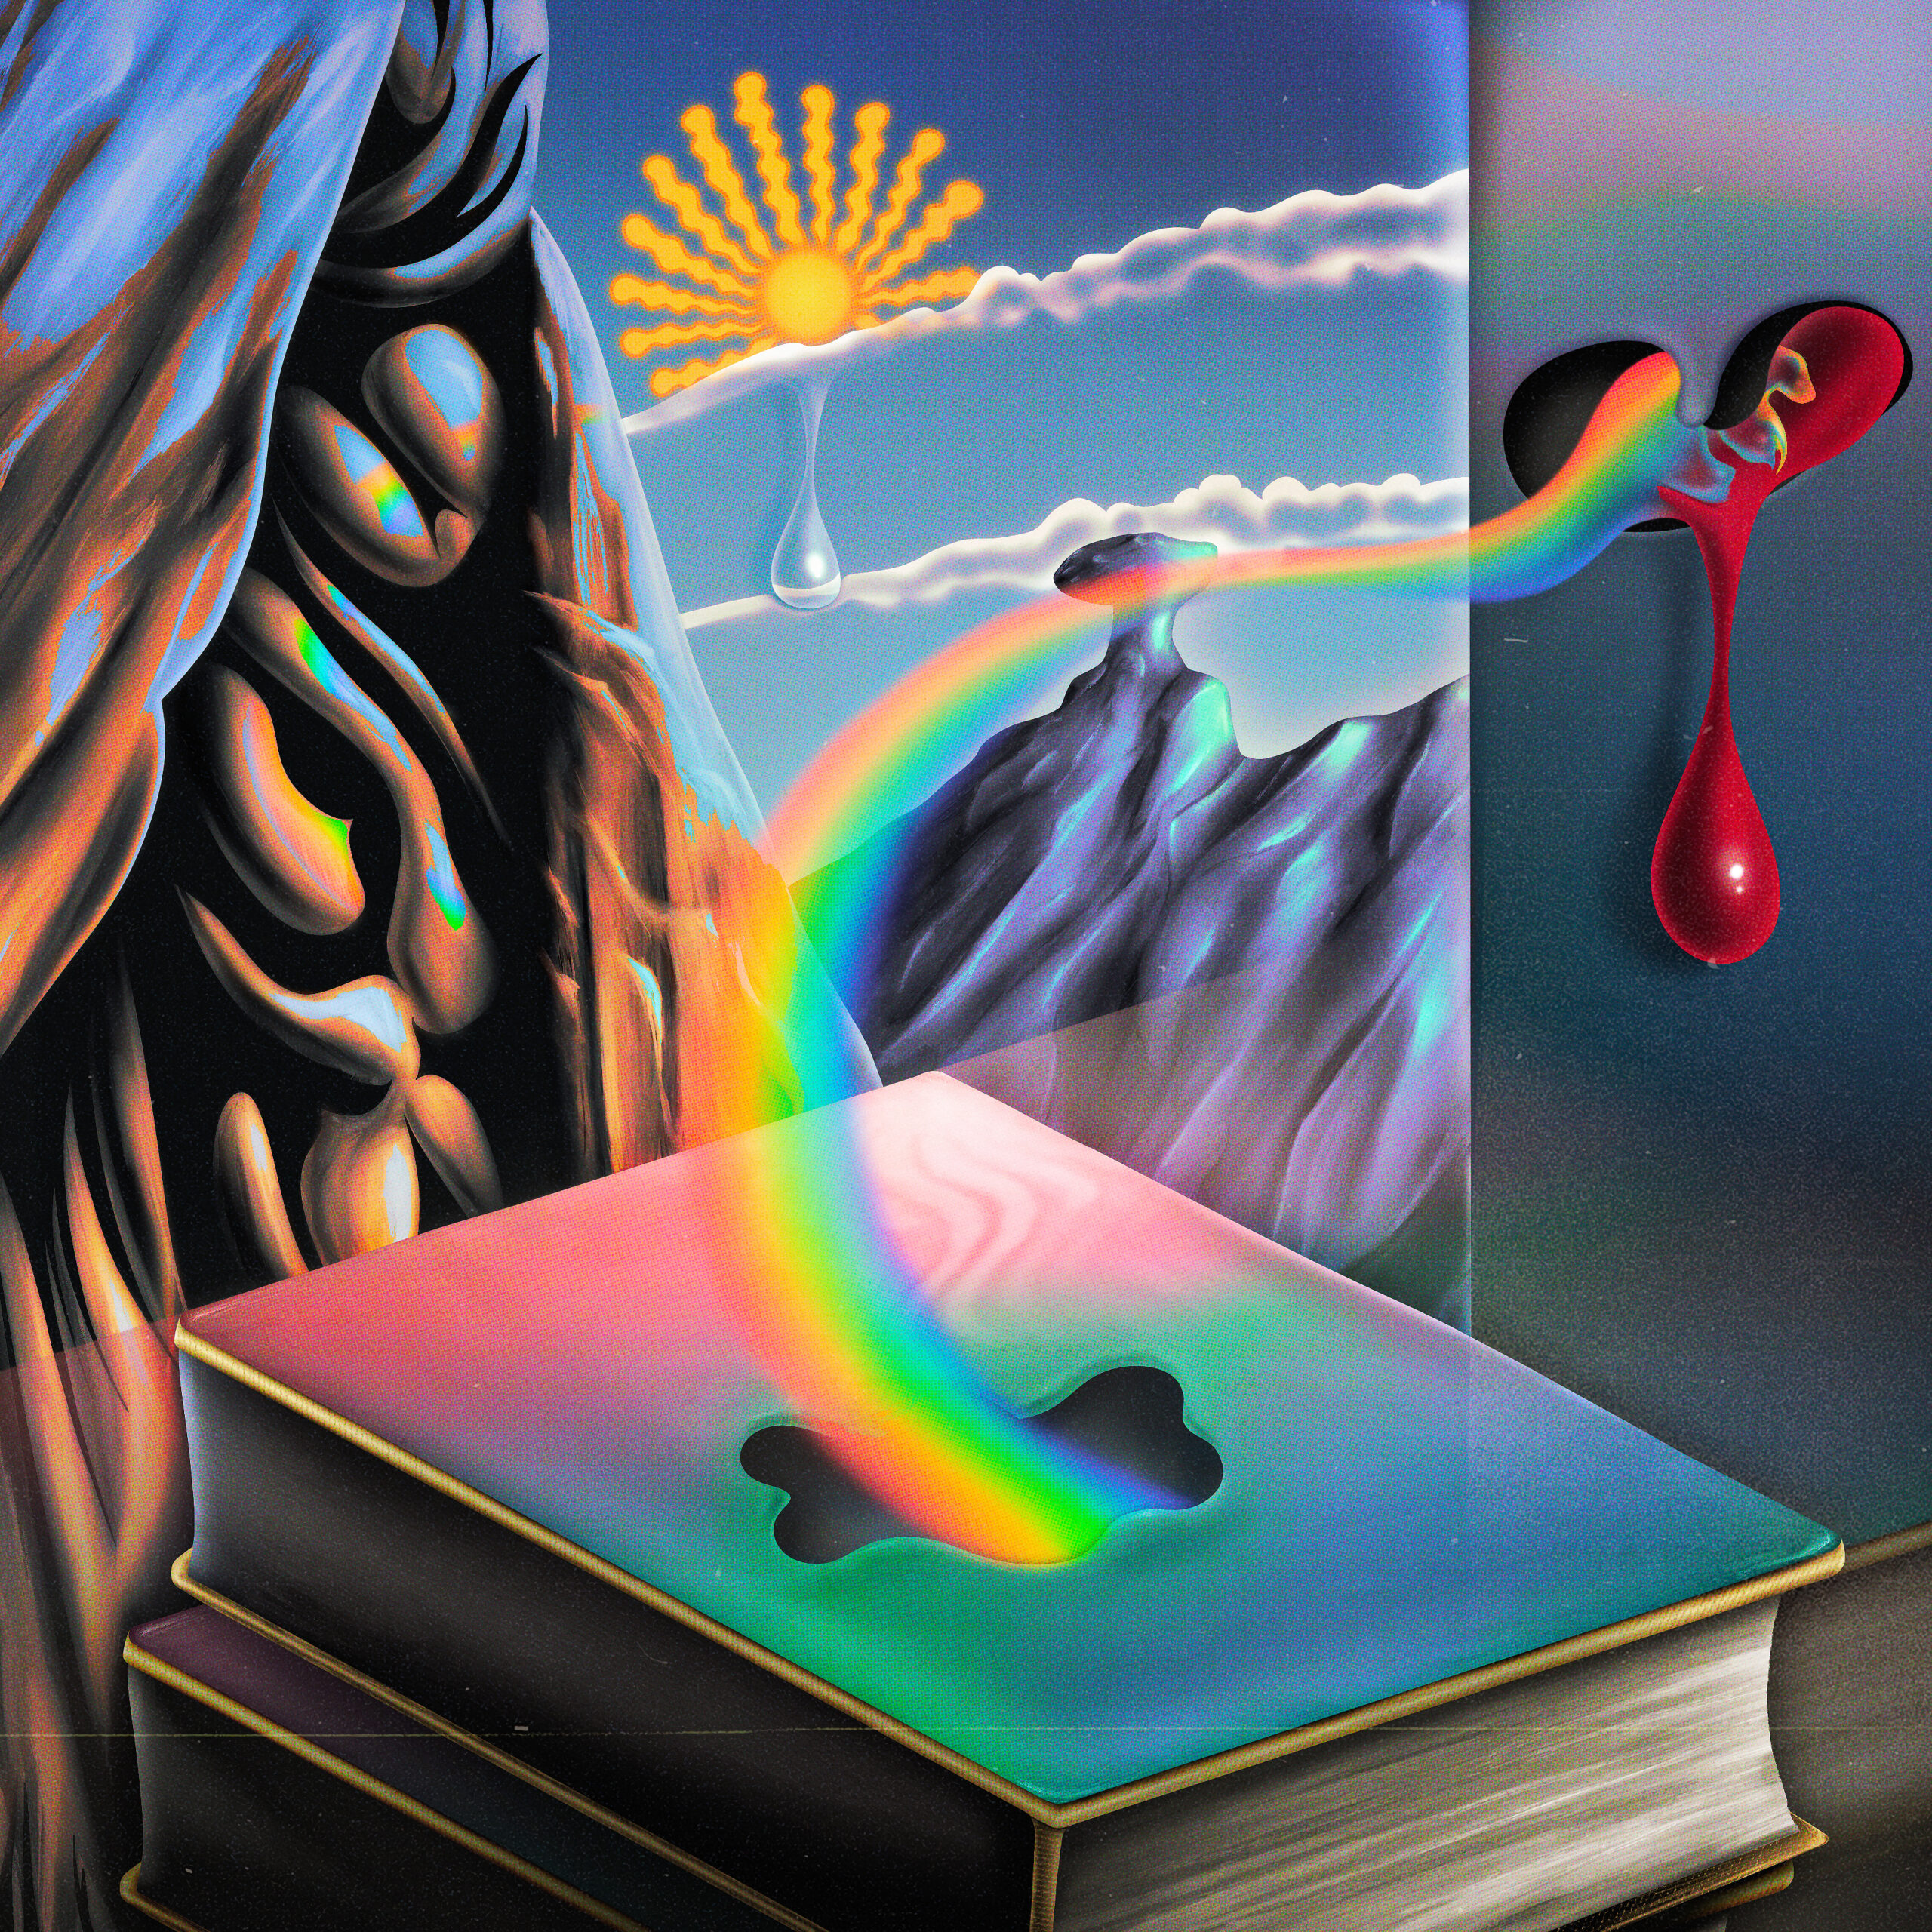 Bloody rainbow William Blake inspired art illustration - Remy Lewandowski